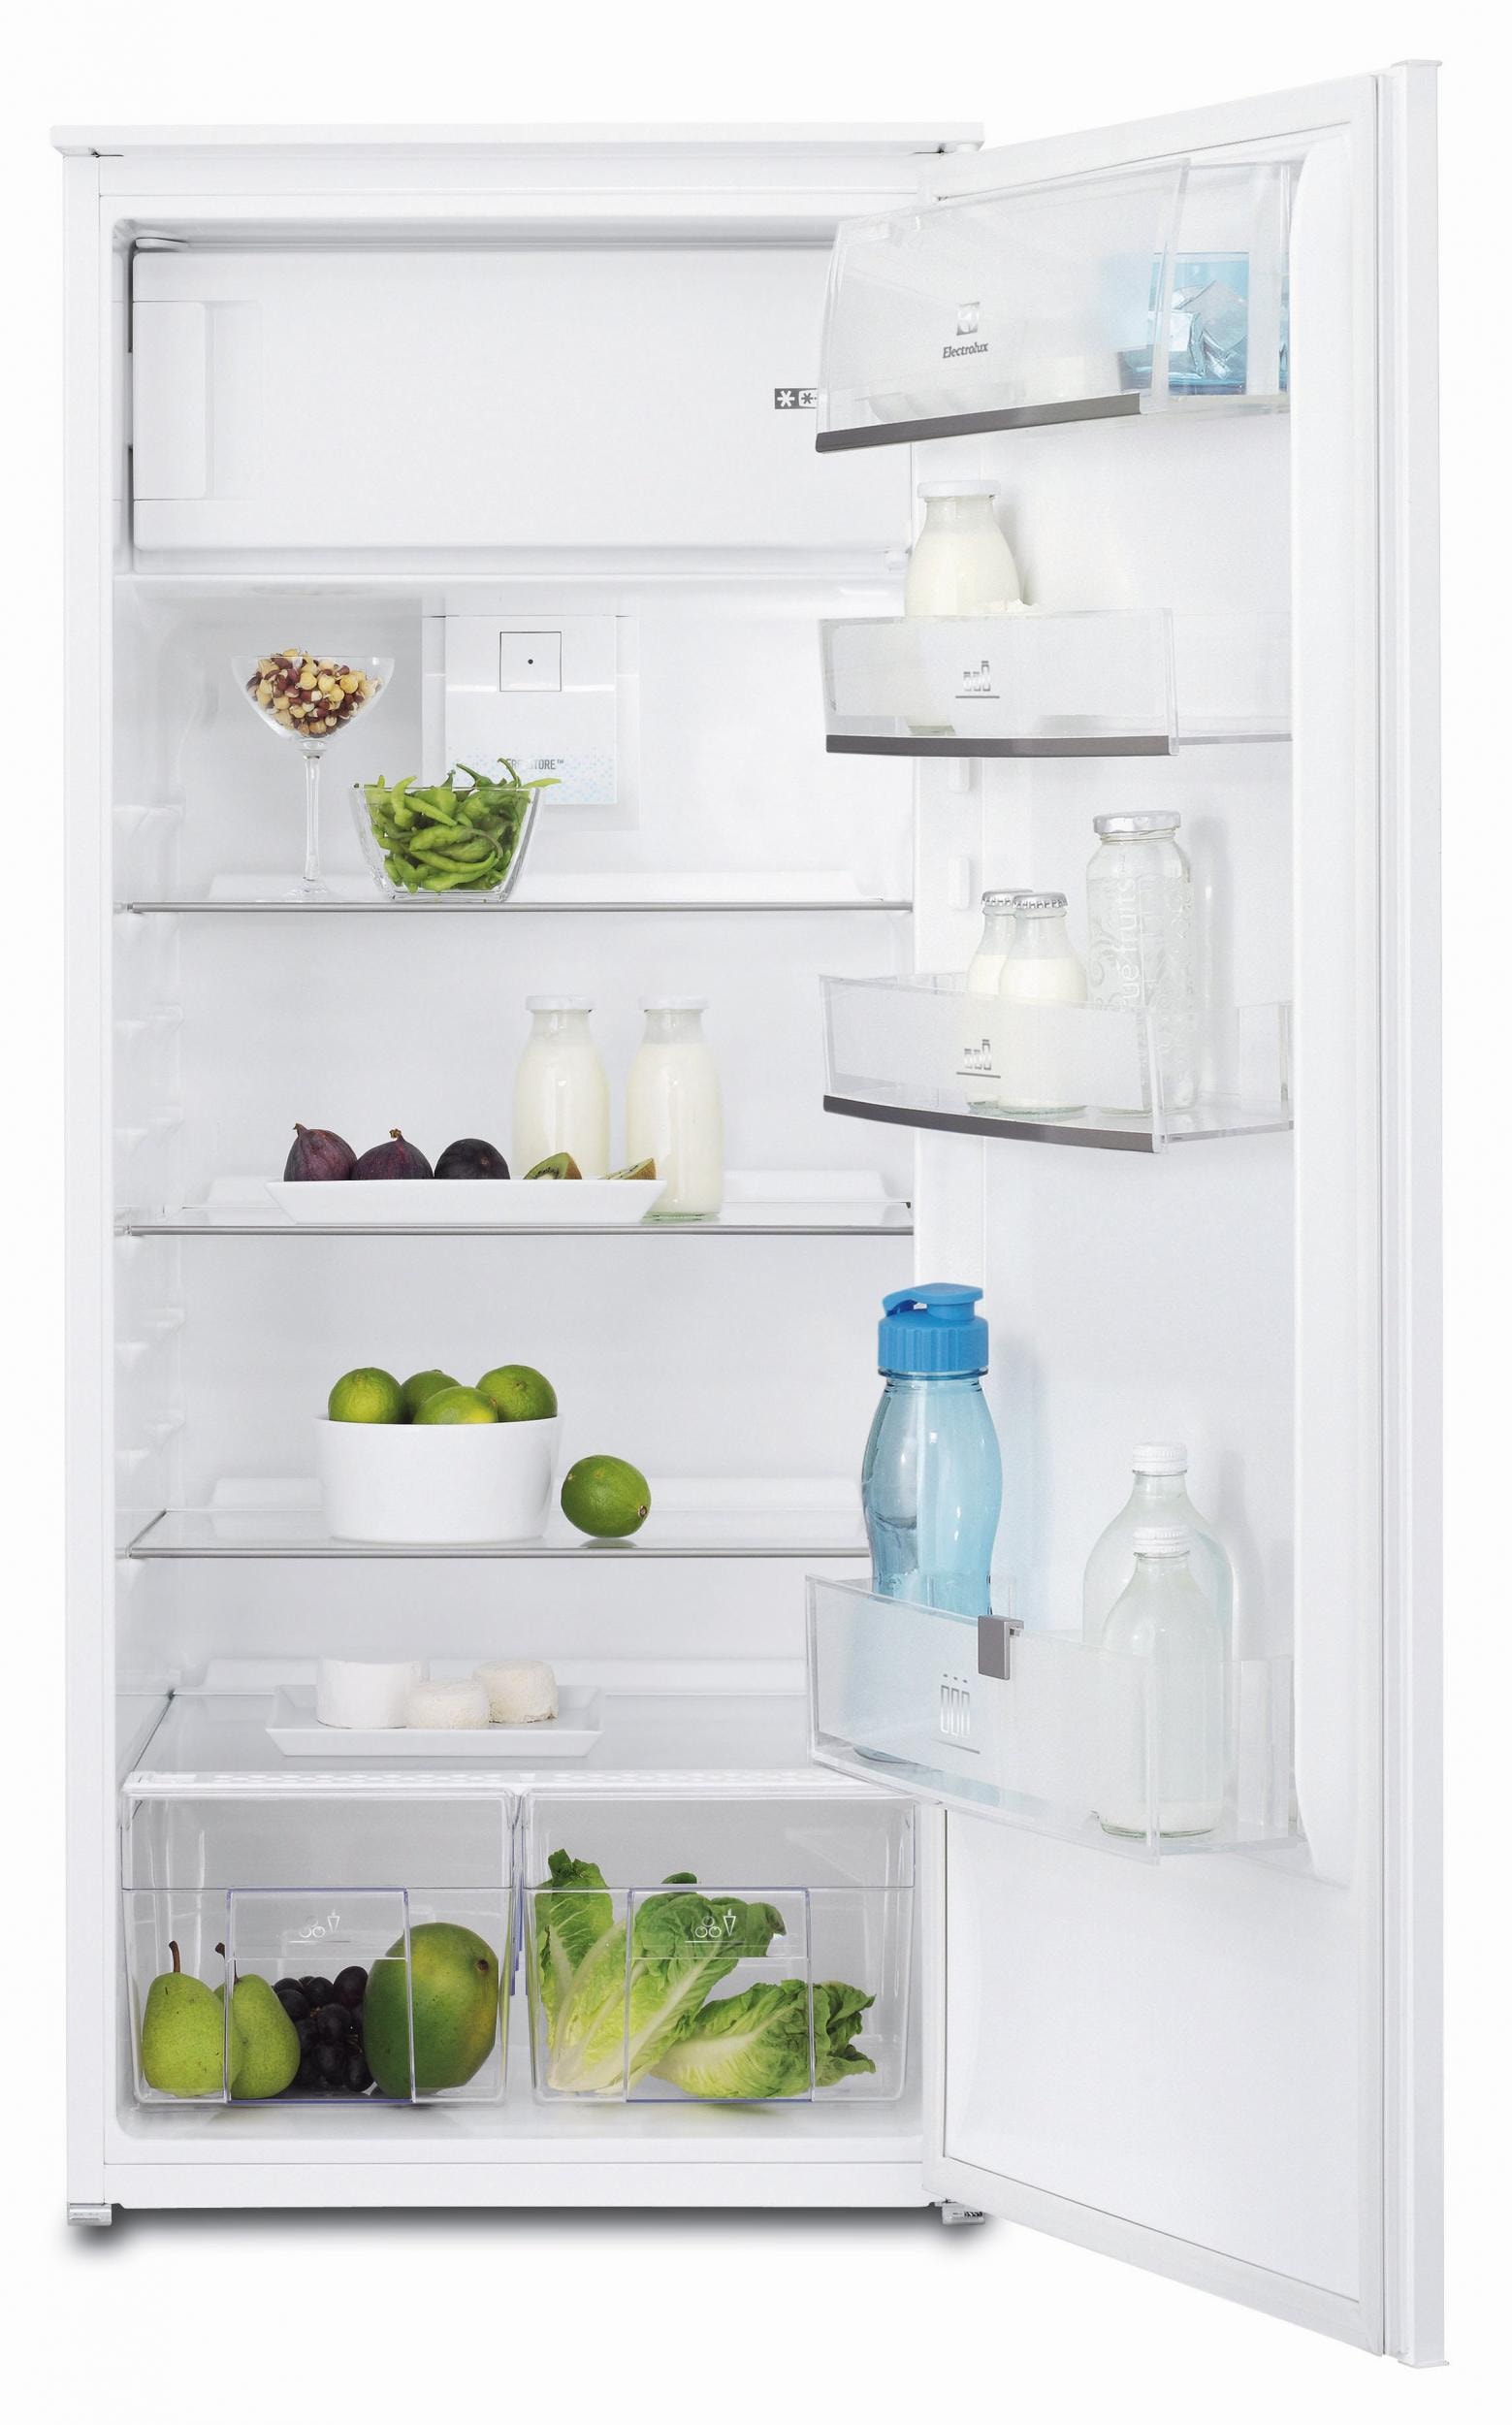 Réfrigérateur intégrable CANDY CFBO3550E/N blanc